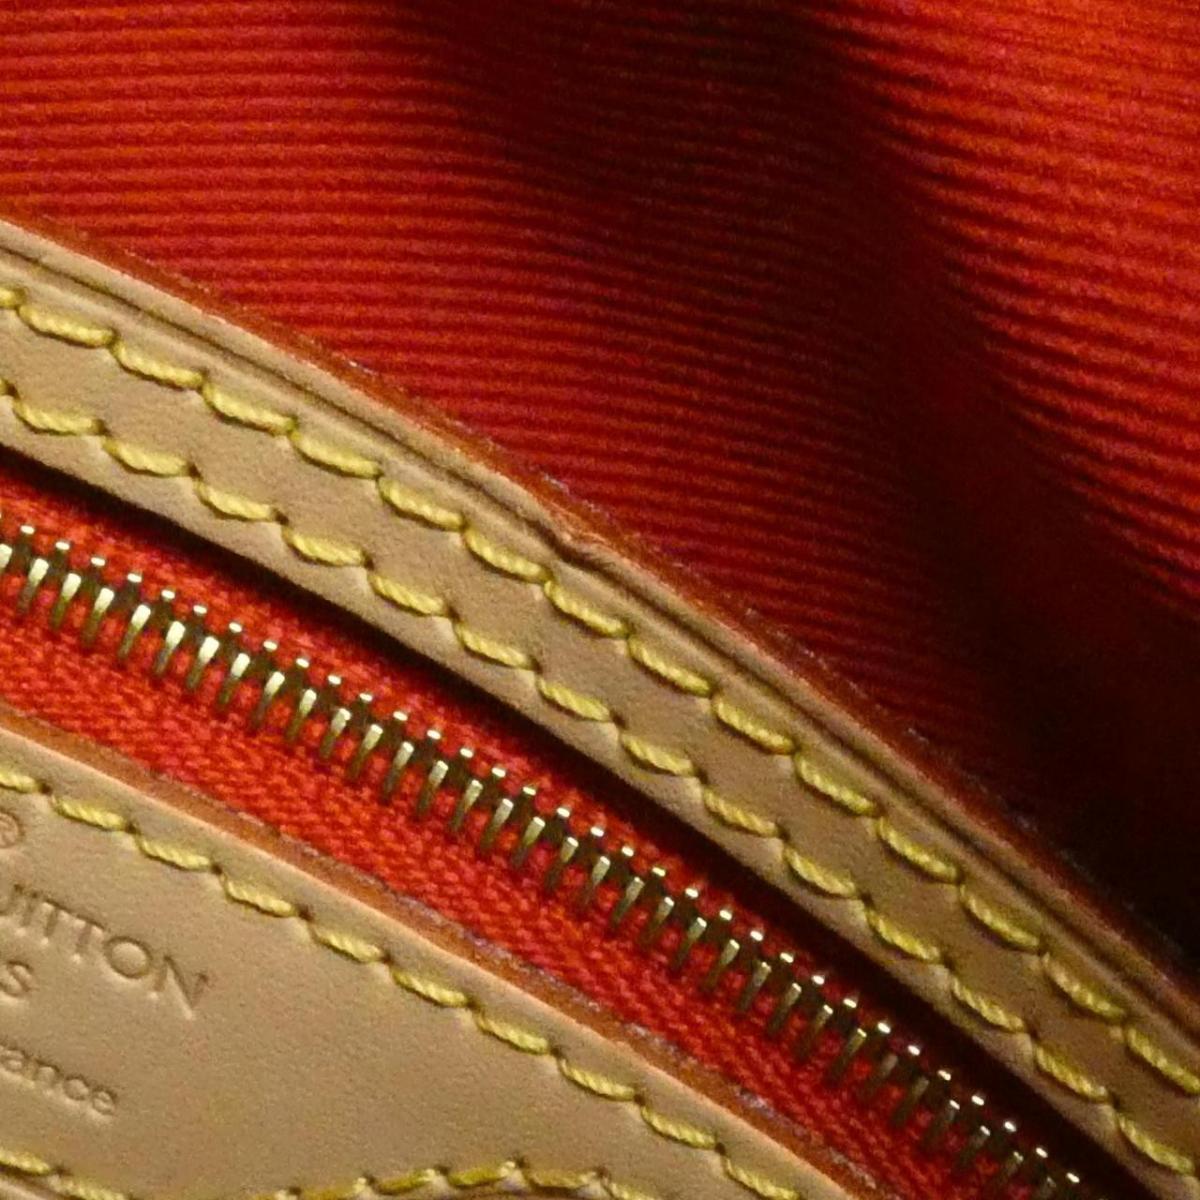 Louis Vuitton Monogram Carey It M45199 Tote Bag